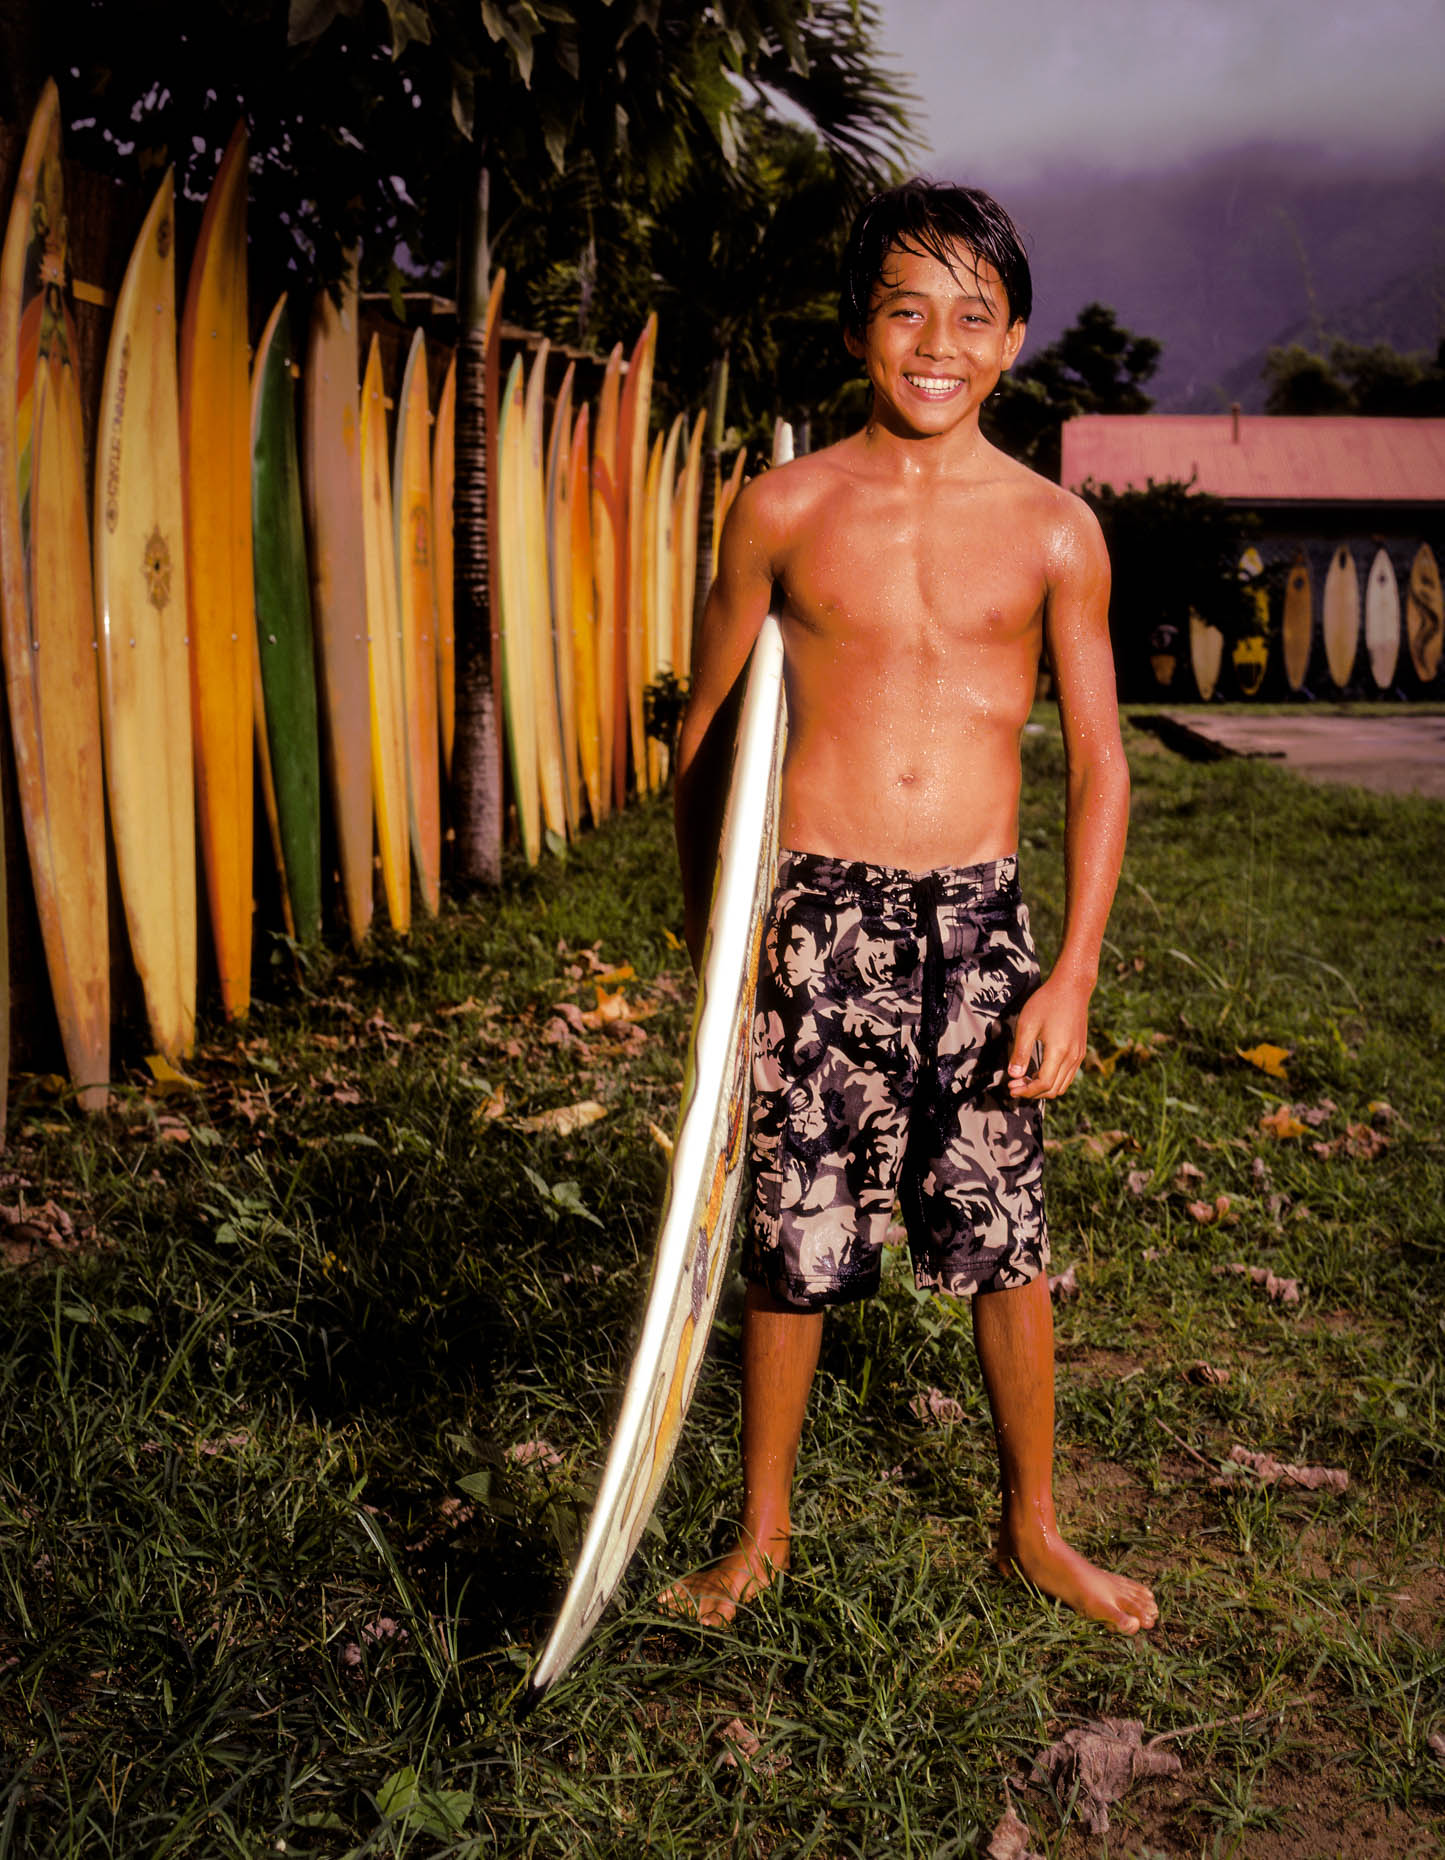 Young boy (12-16 years old) with surfboard in Hanalei, Kauai, HI.